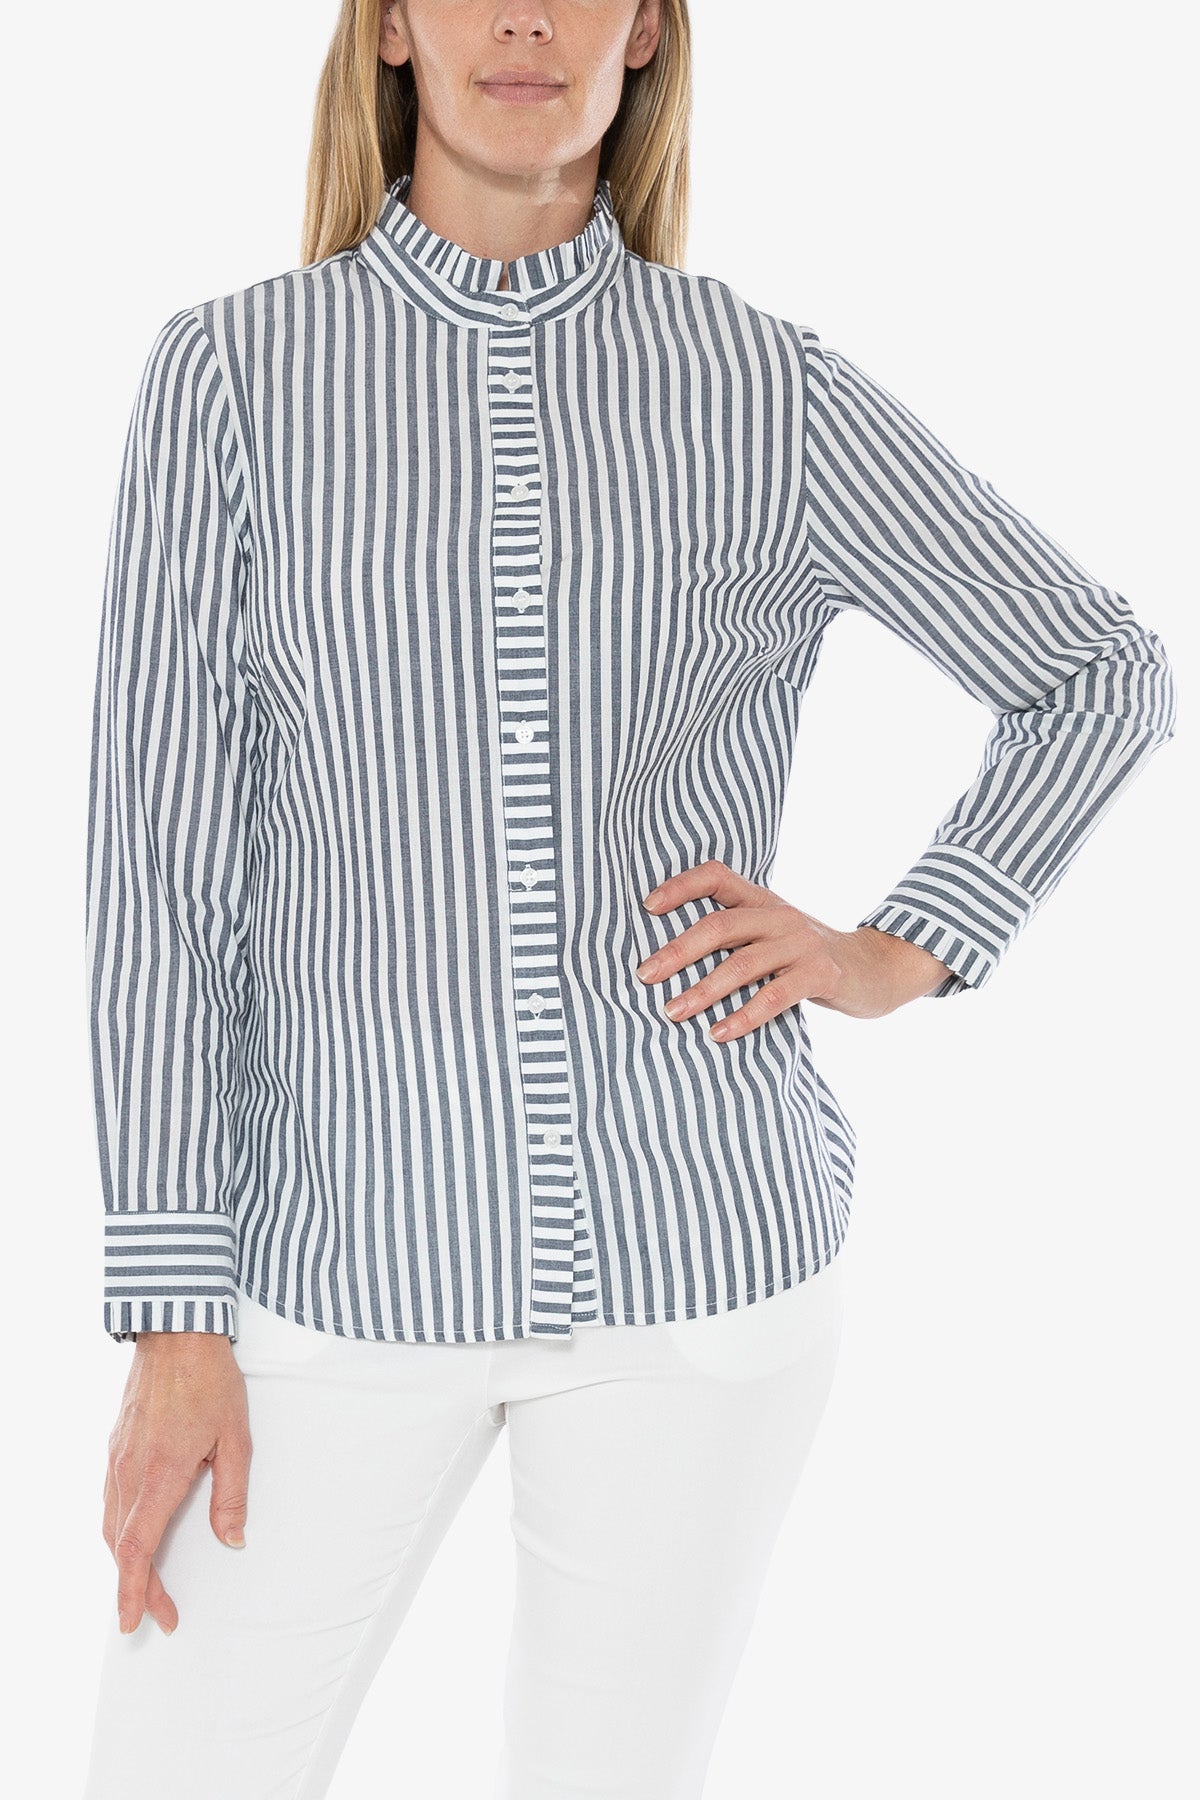 Stripe Shirt White and Navy